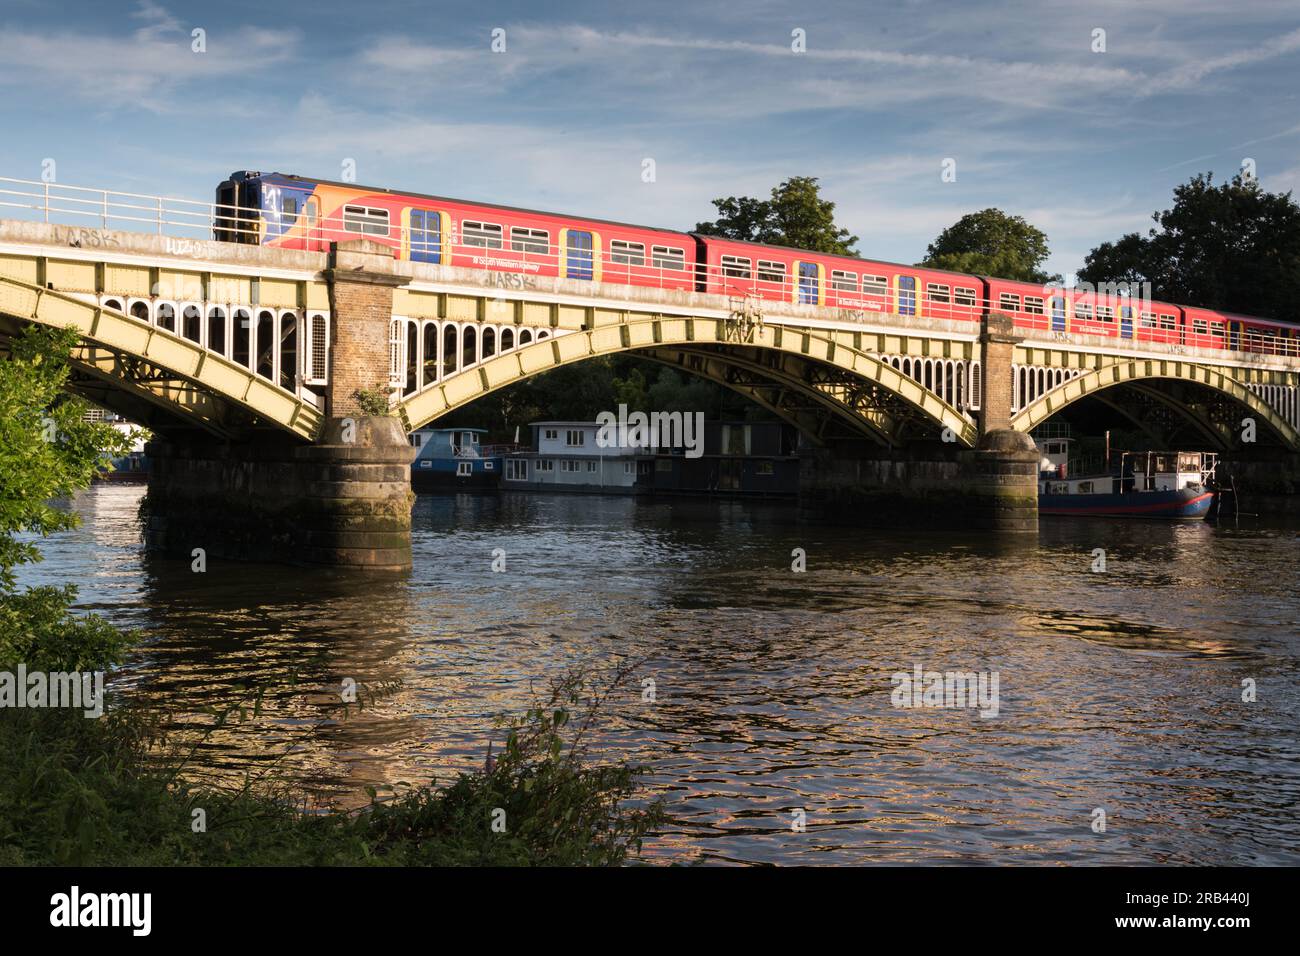 A South Western Railways commuter train on Richmond Railway Bridge above the River Thames, London, England, U.K. Stock Photo